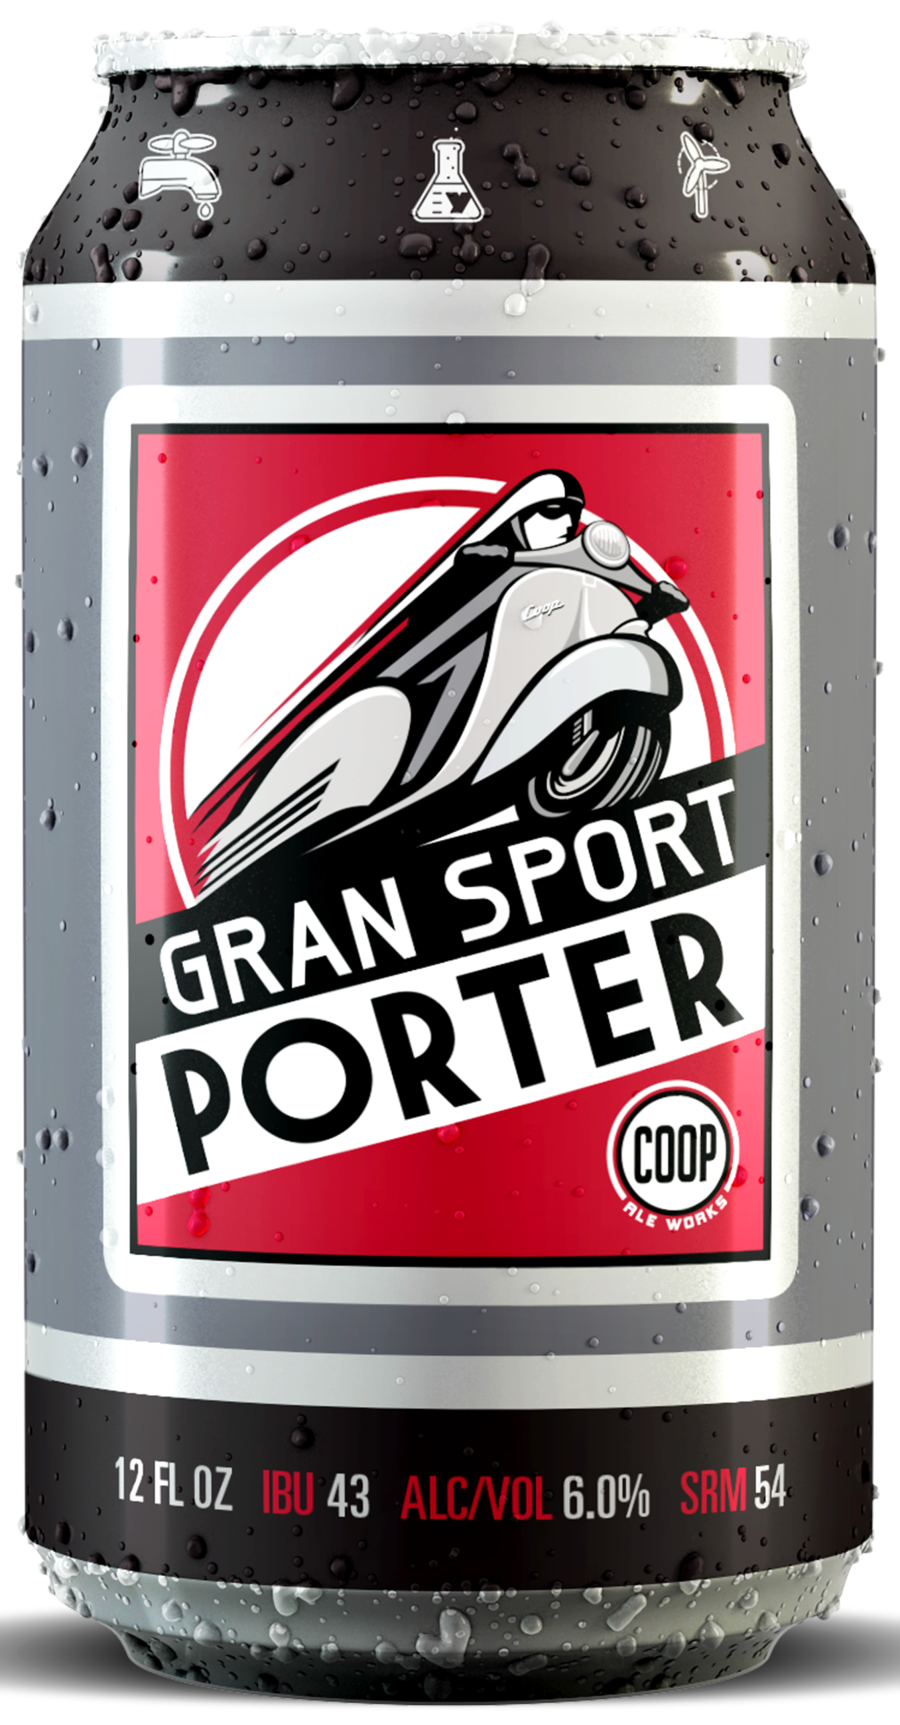 Gran Sport Porter